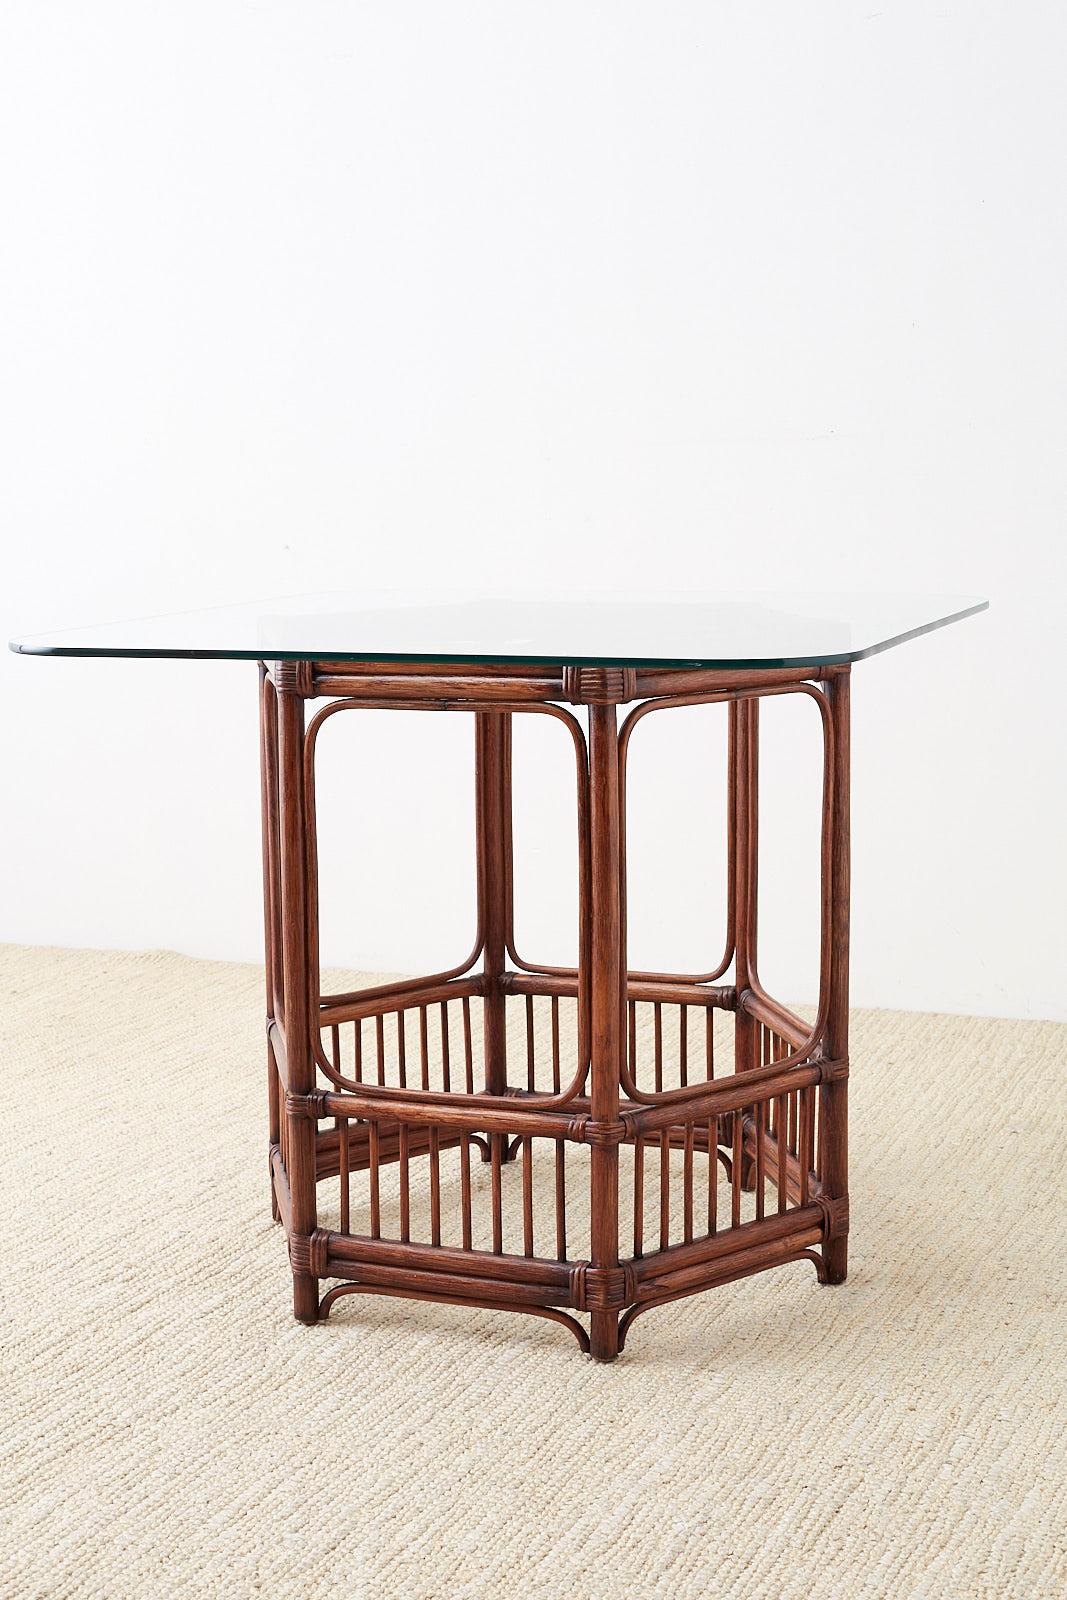 Asian Hexagonal Bamboo Rattan Dining or Center Table